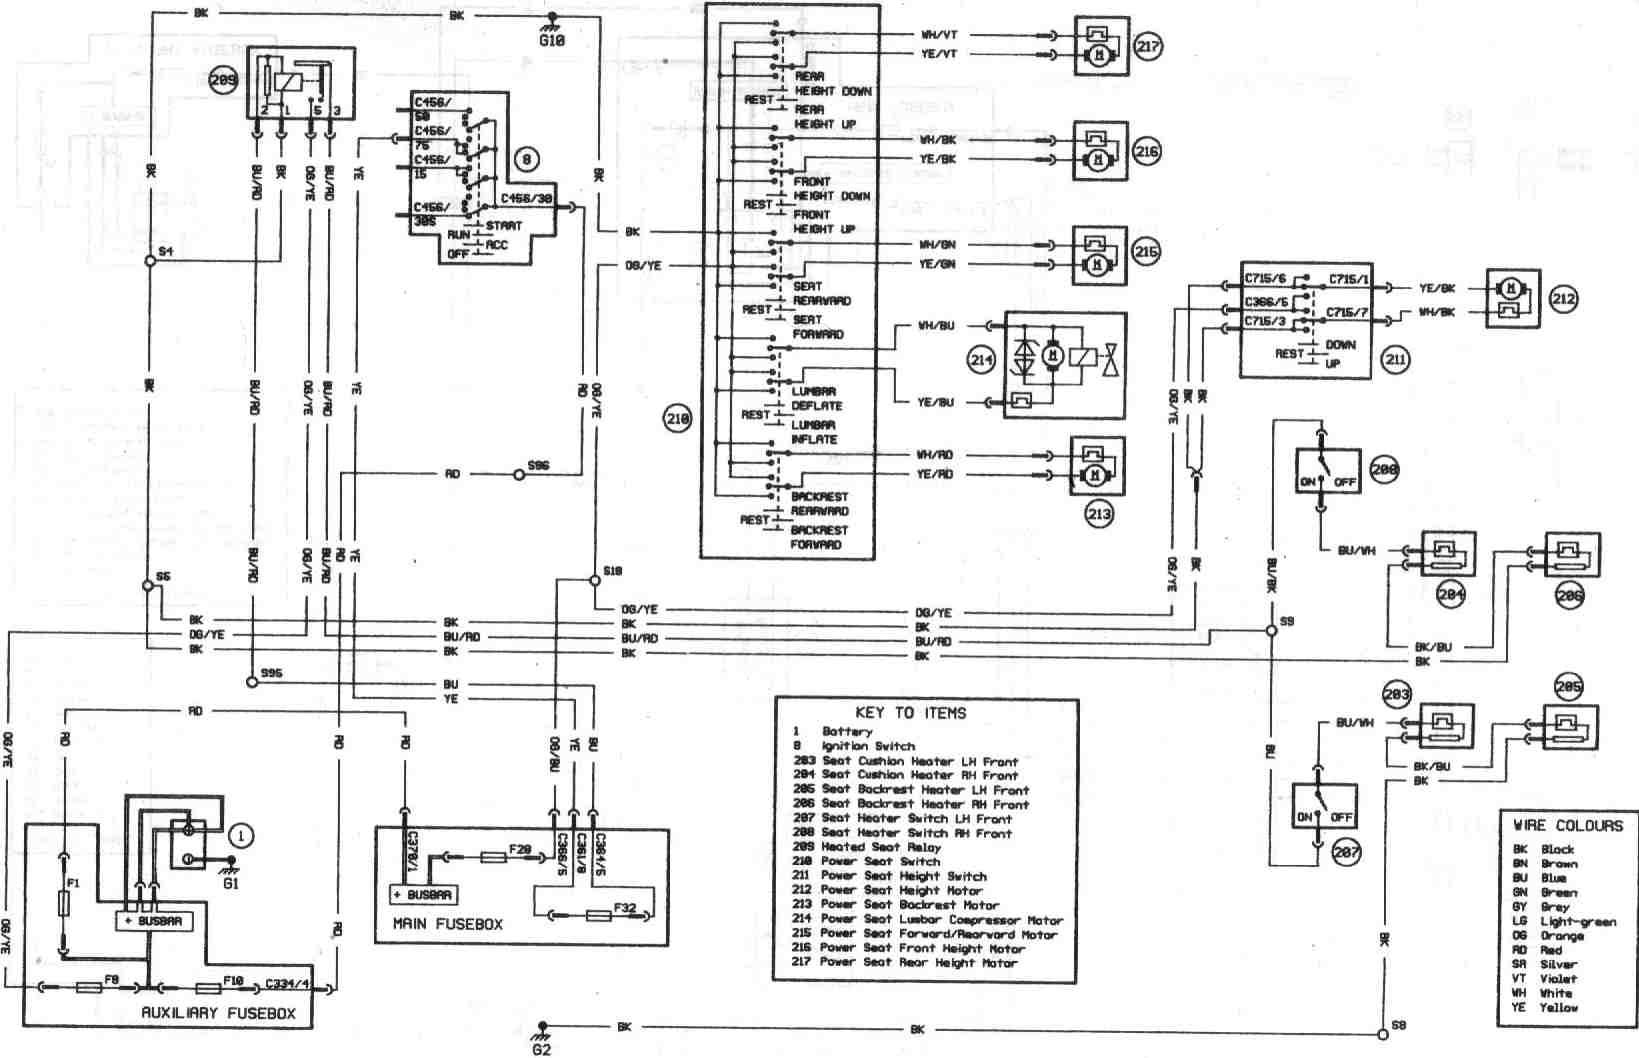 Ford mondeo mk4 radio wiring diagram